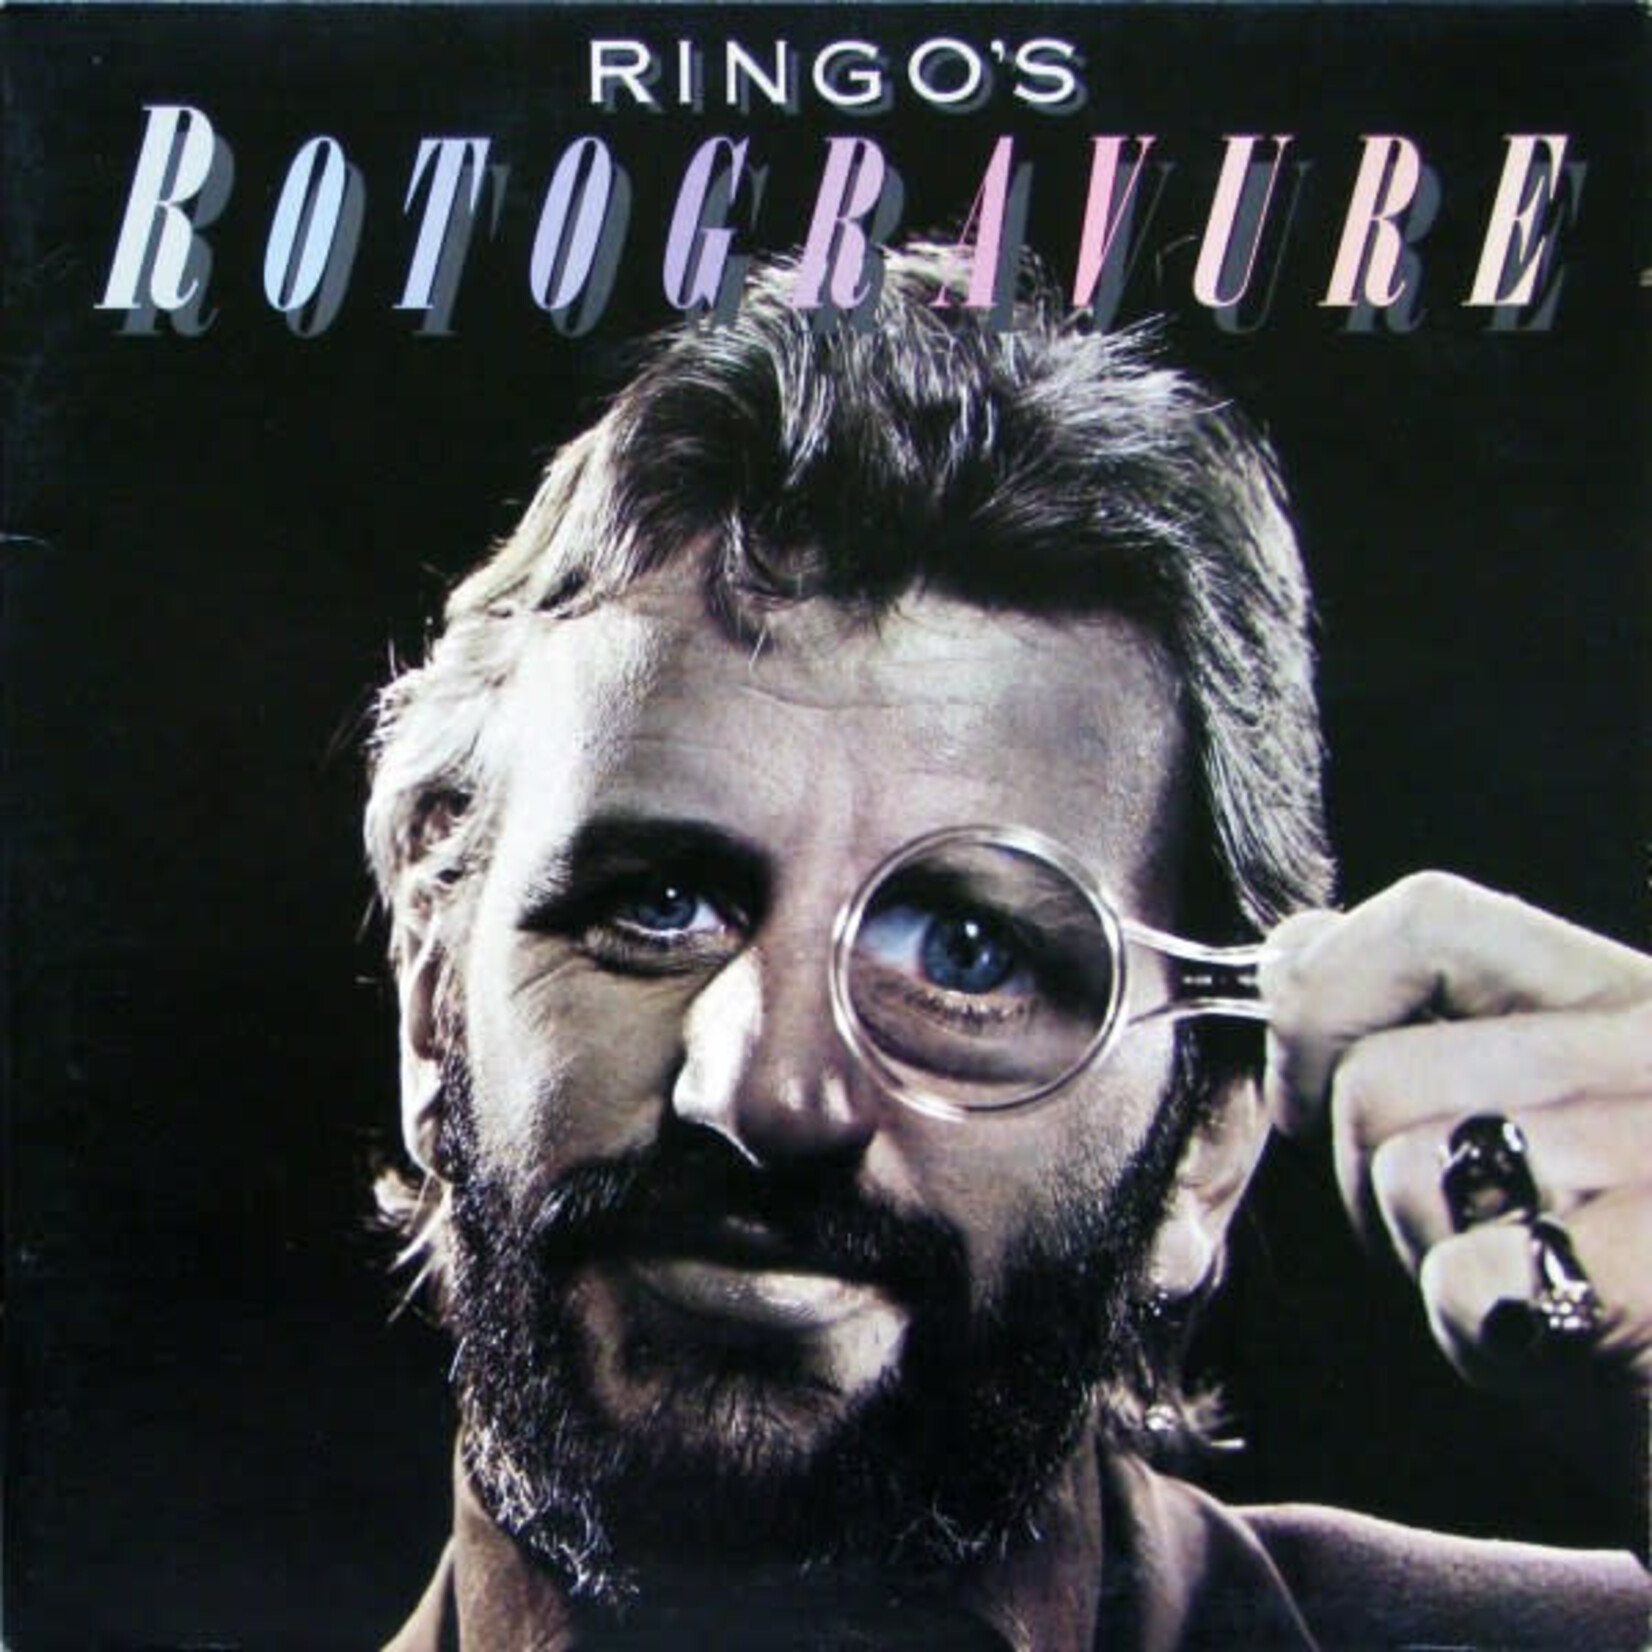 Ringo Starr Ringo Starr – Ringo's Rotogravure (FACTORY SEALED, 1976, LP, Atlantic – SD 18193) SCAZ